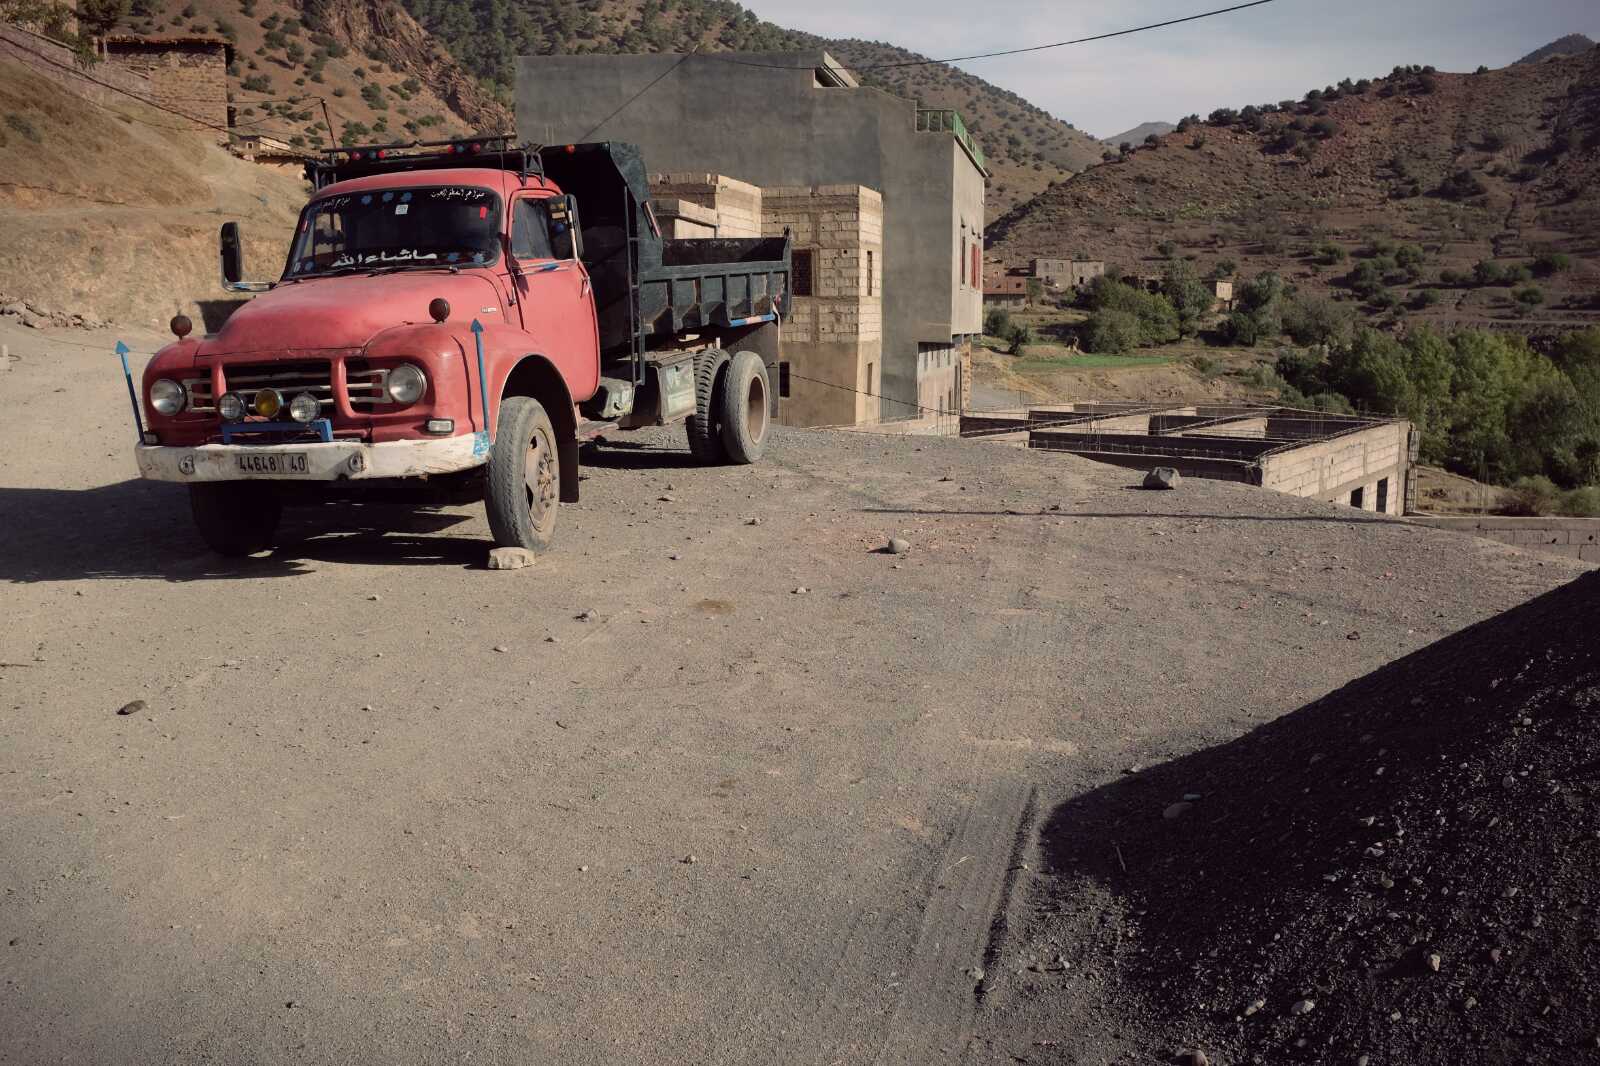 Another groovy old truck near Ait Hamlil